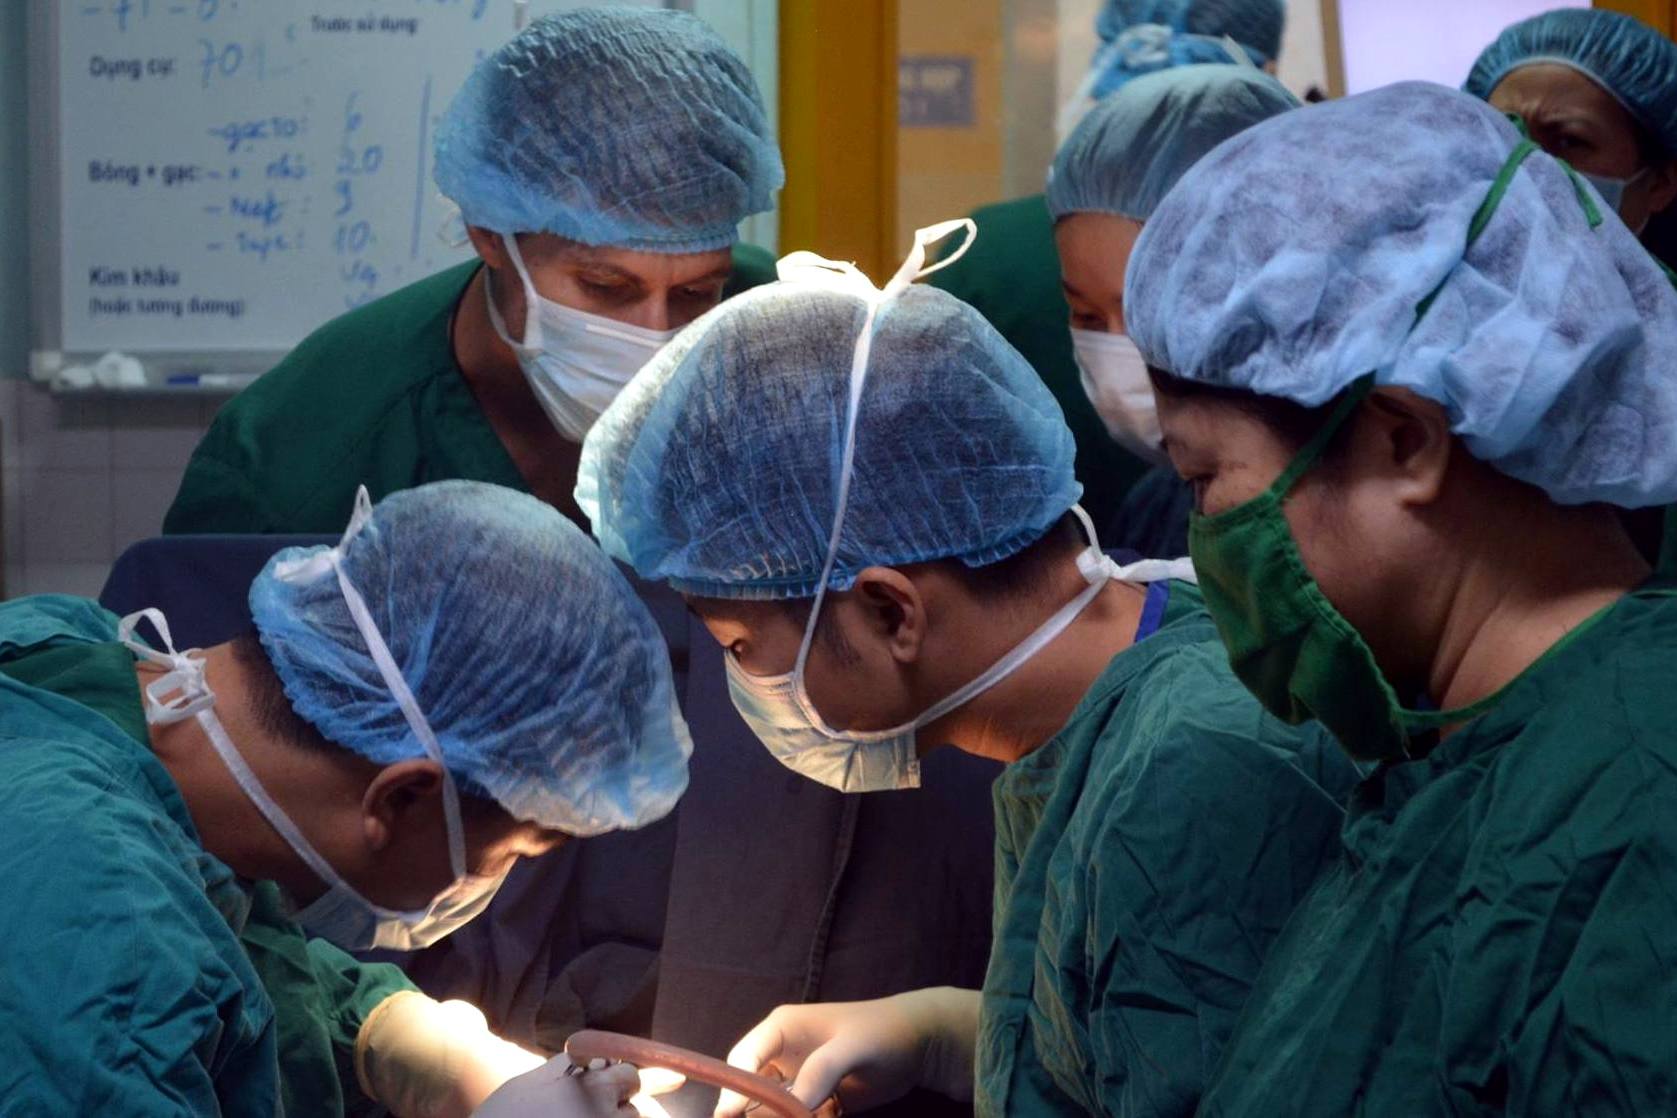 Kind cuts for kids DEK Foundation Vietnam Surgeons